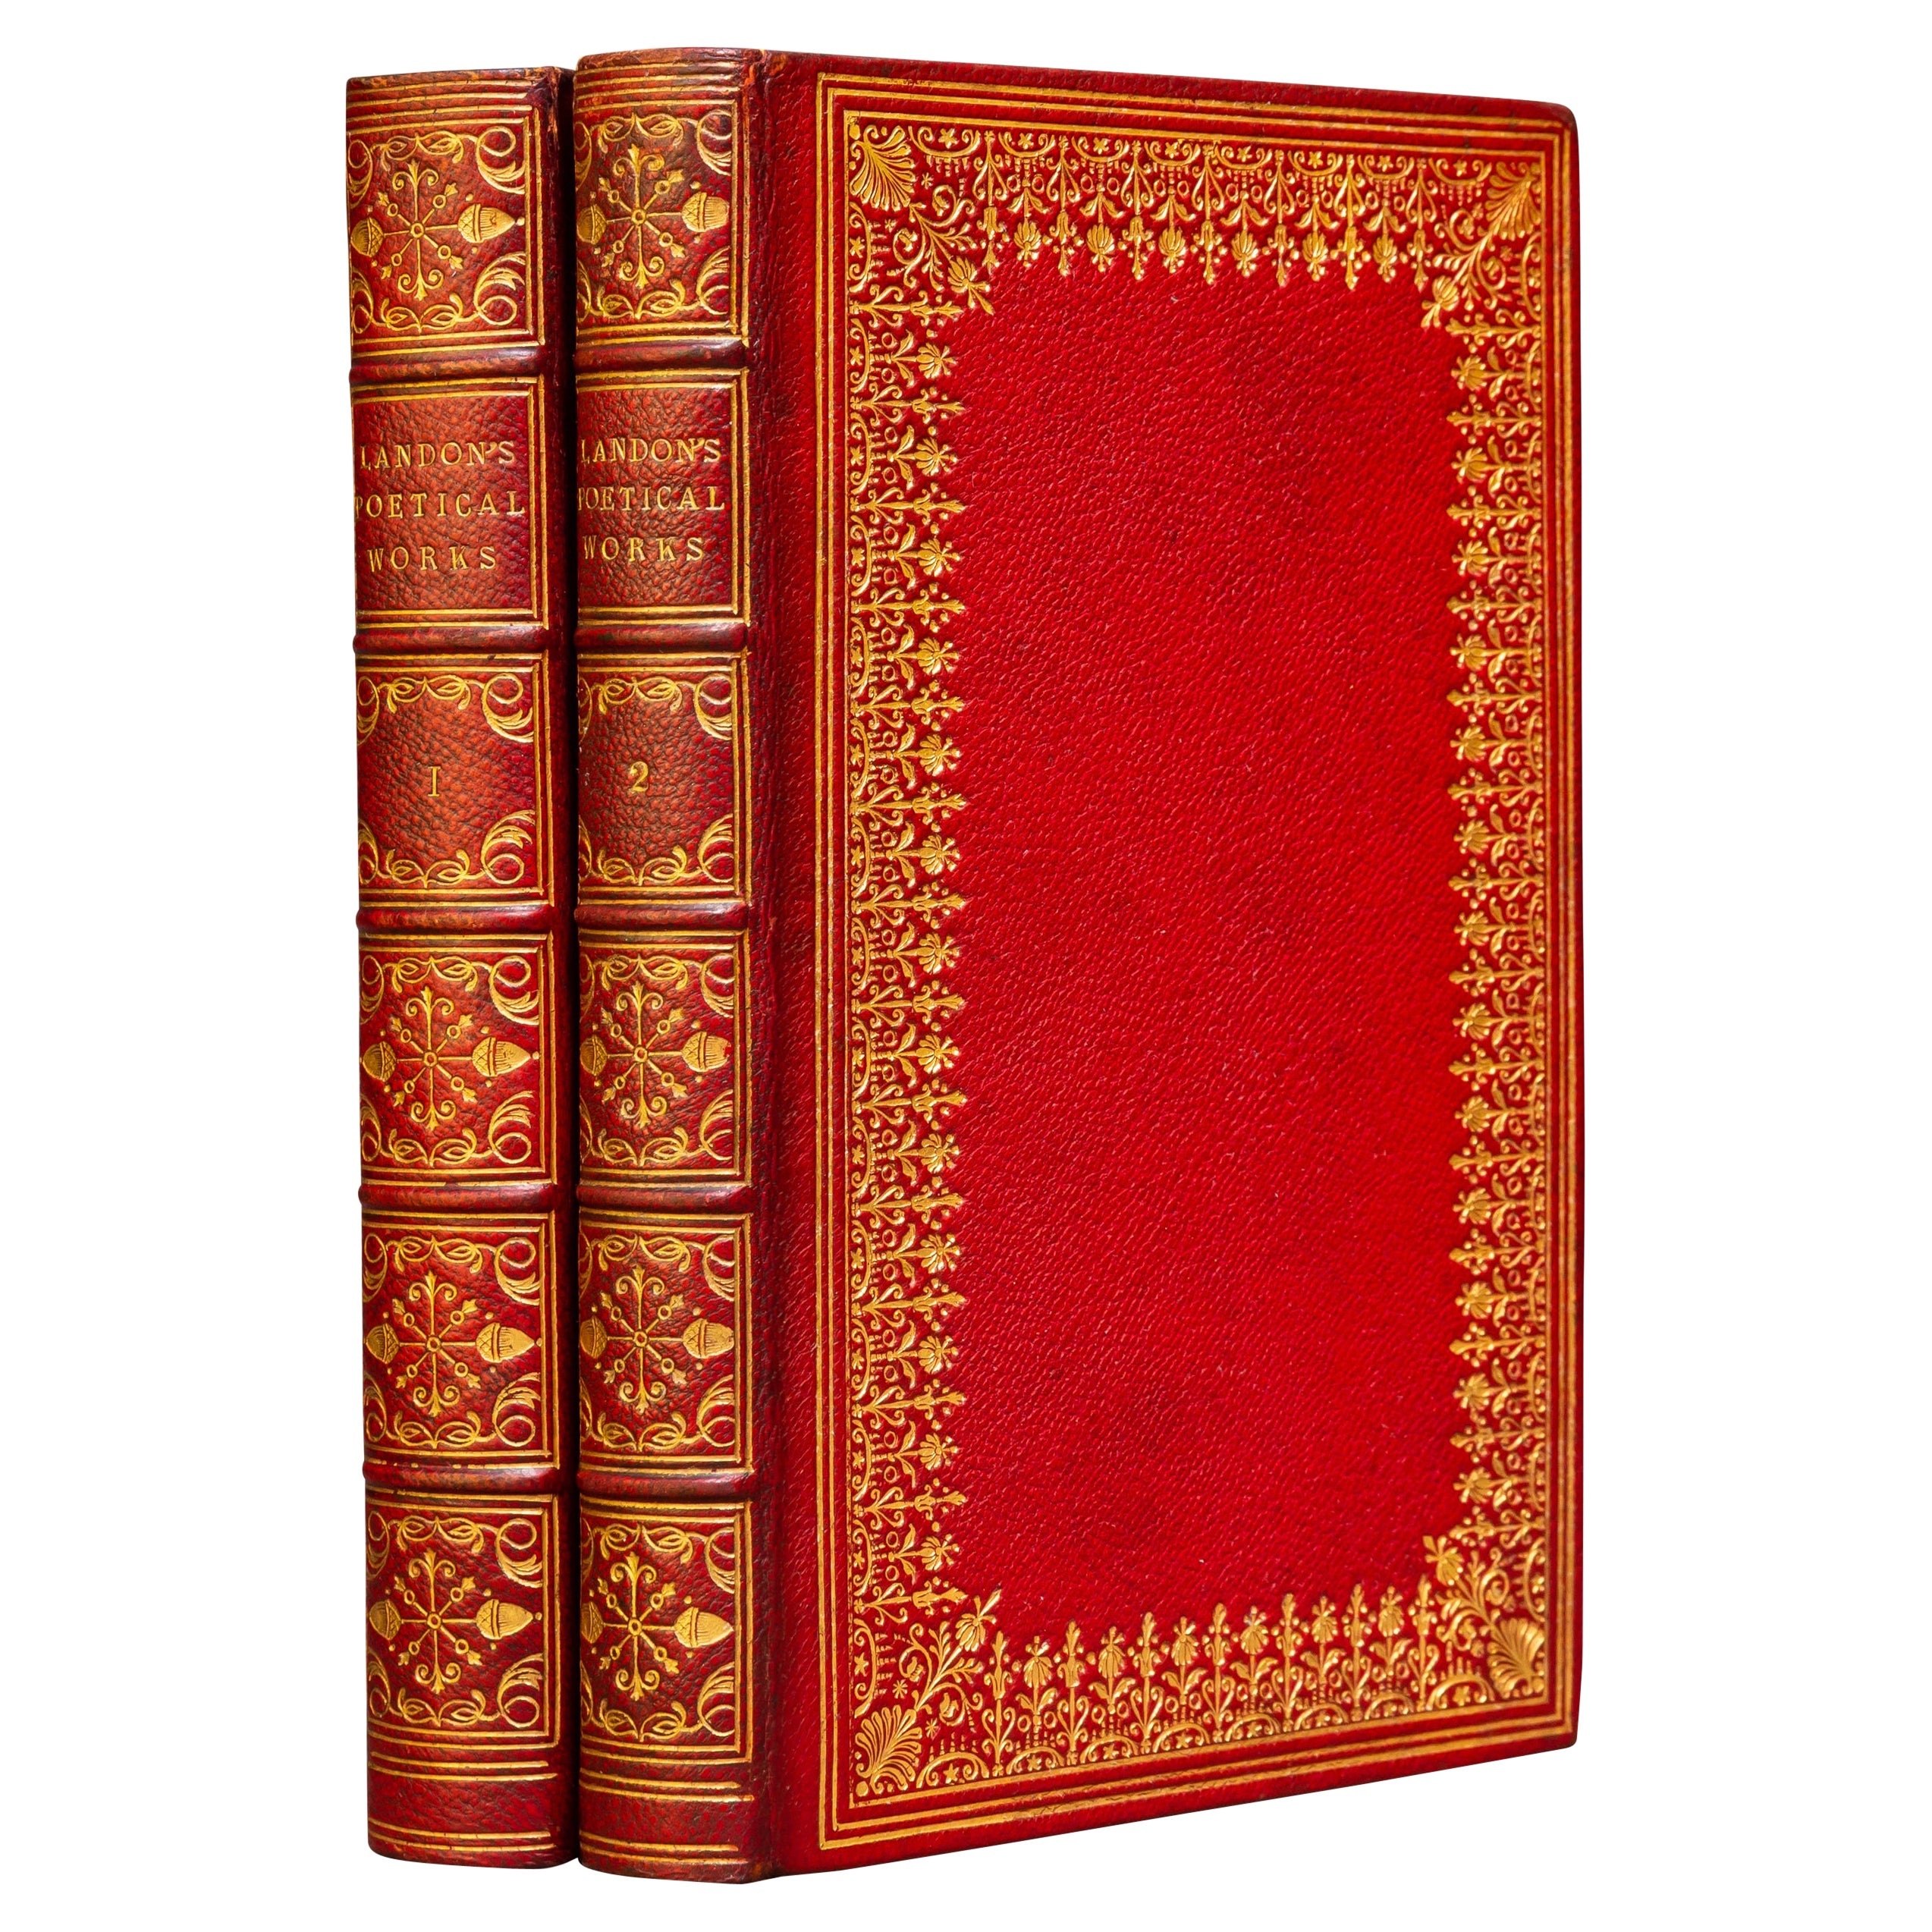 'Book Sets' 2 Volumes, Letitia Elizabeth Landon, the Poetical Works